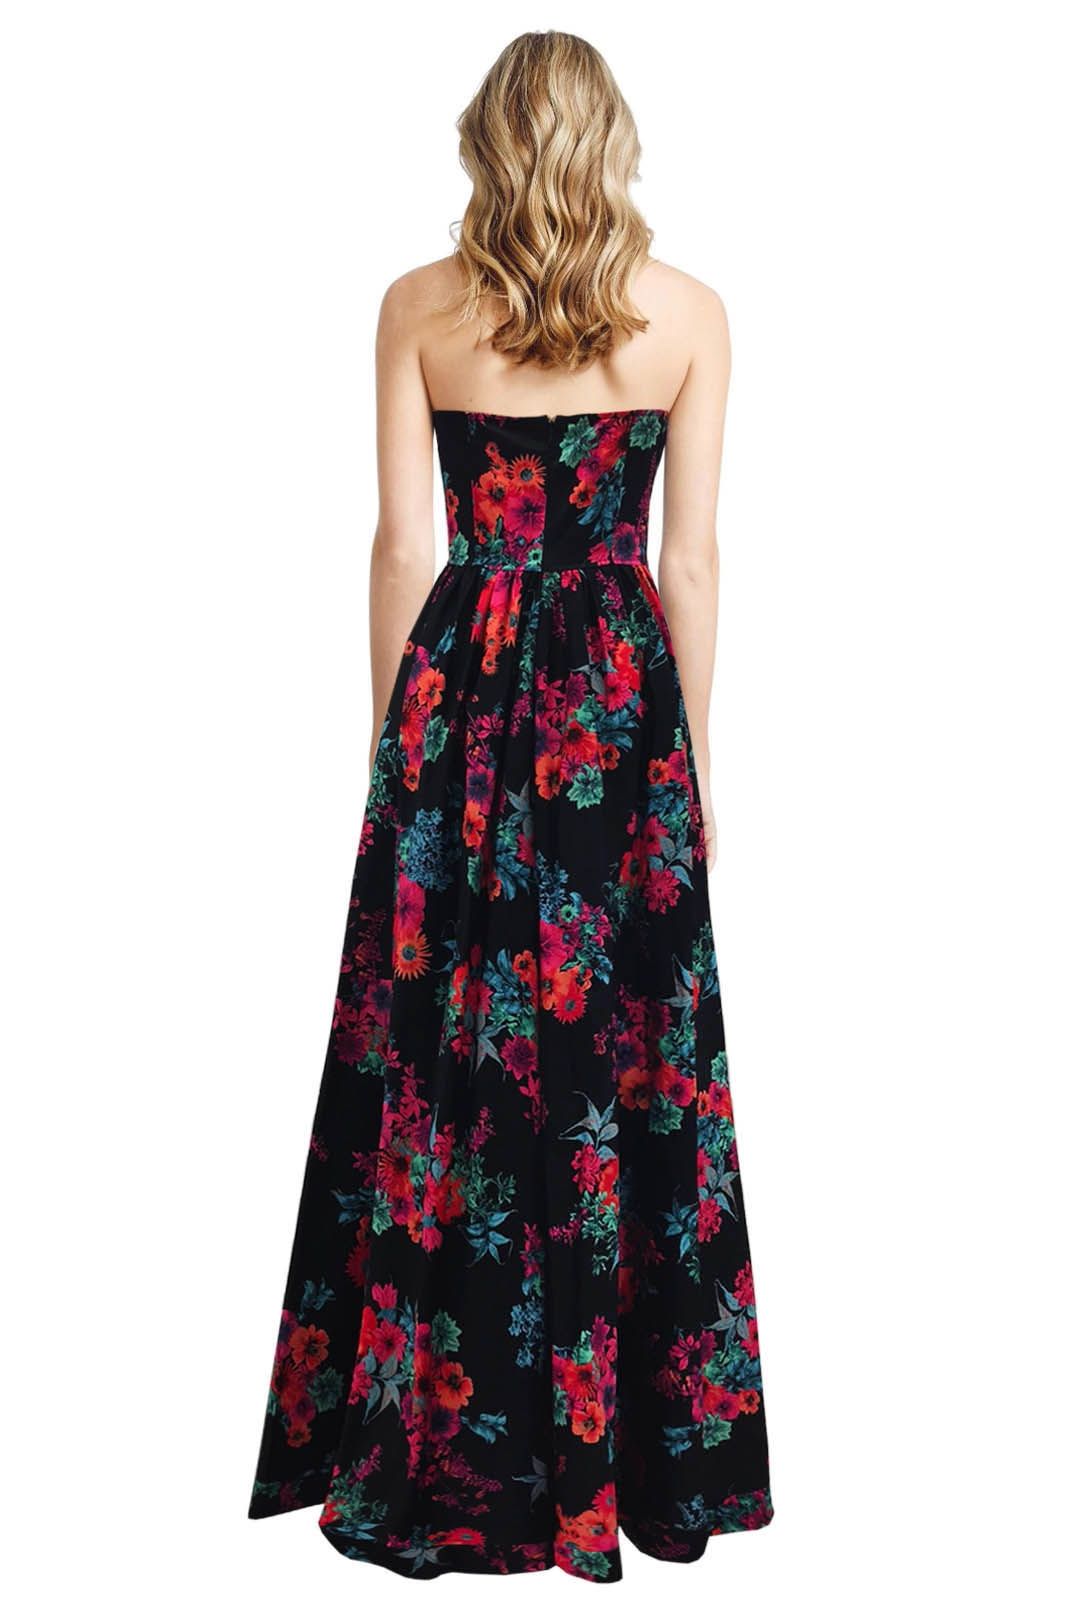 Floral Prints Dress by Bronx & Banco for Hire | GlamCorner